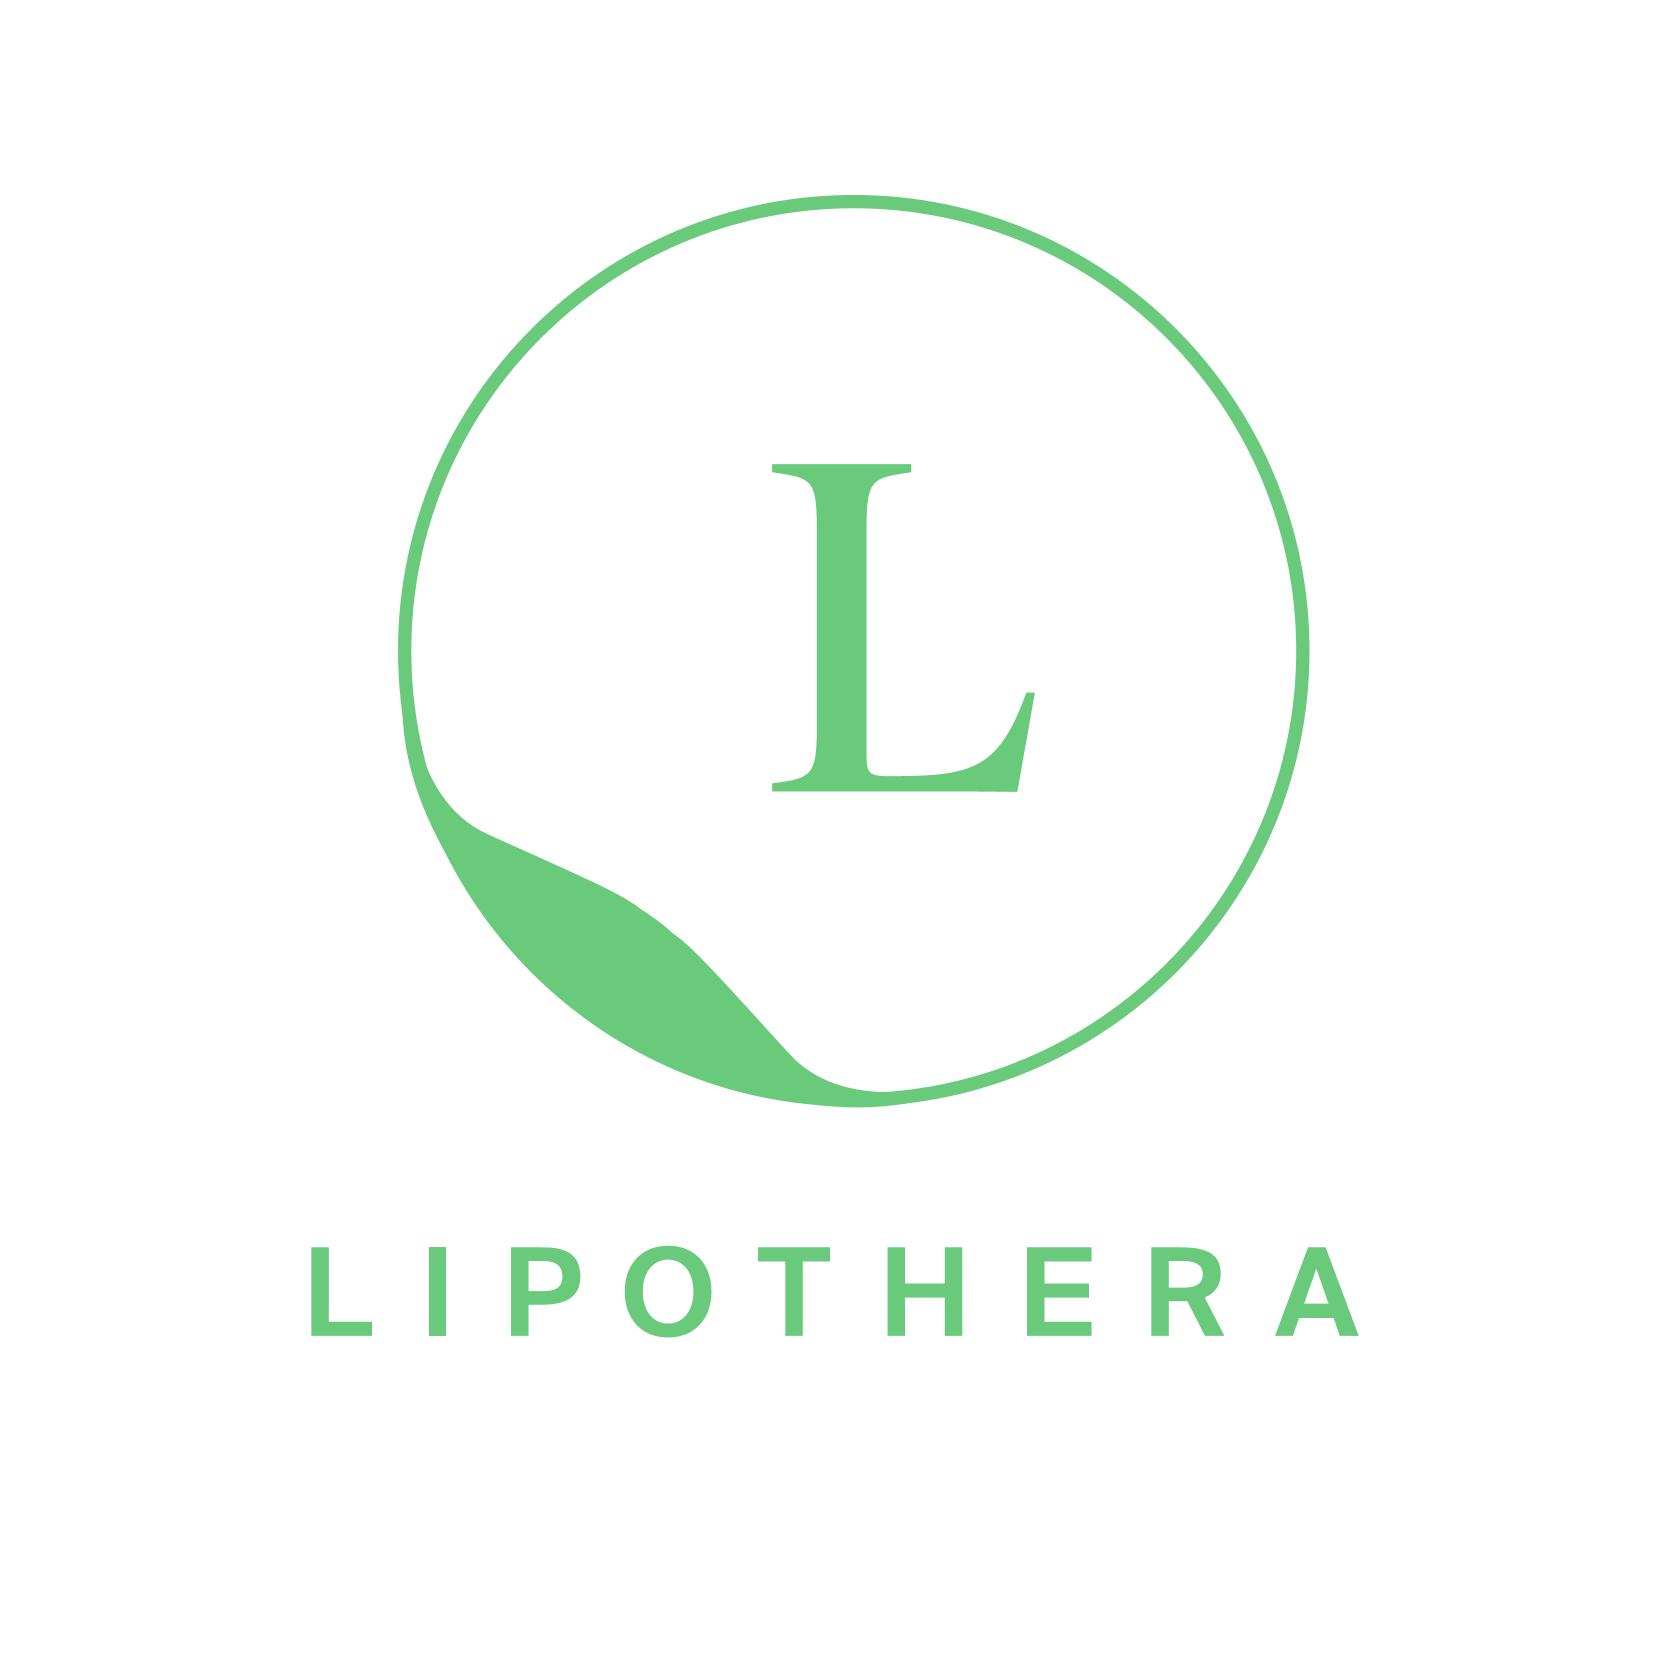 Lipothera Logo Dr. Grimm